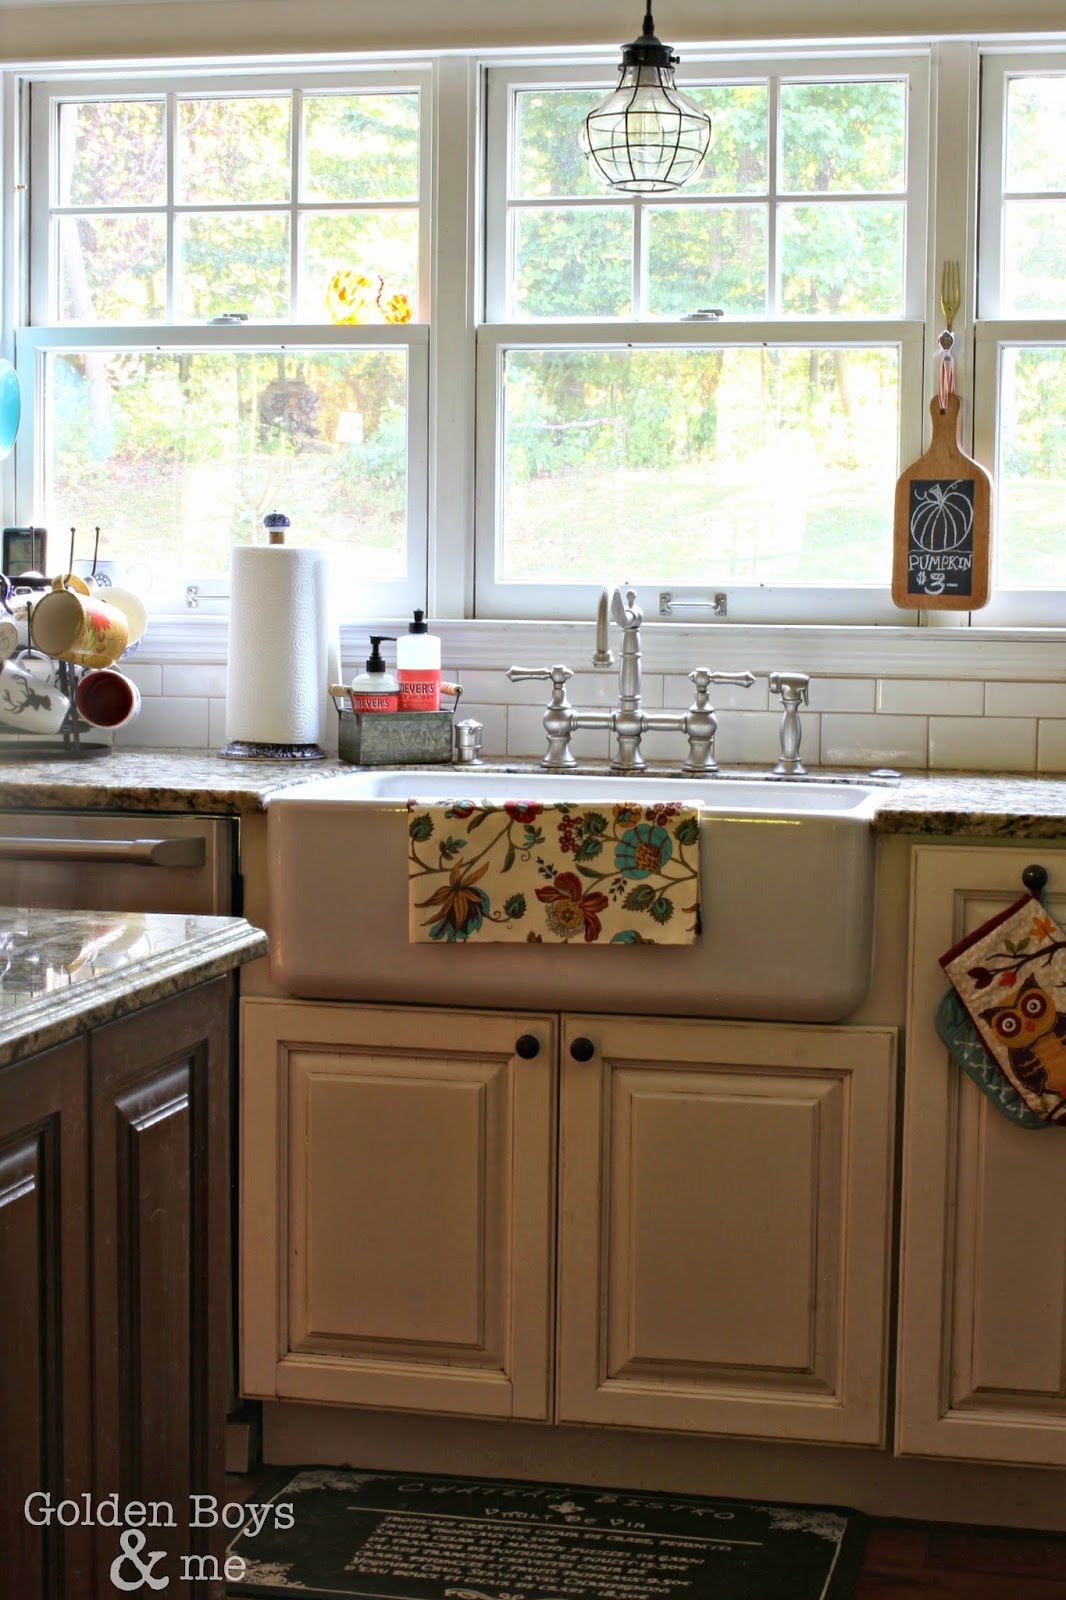 Shaw's Original Farm house apron sink in fall decor kitchen-www.goldenboysandme.com